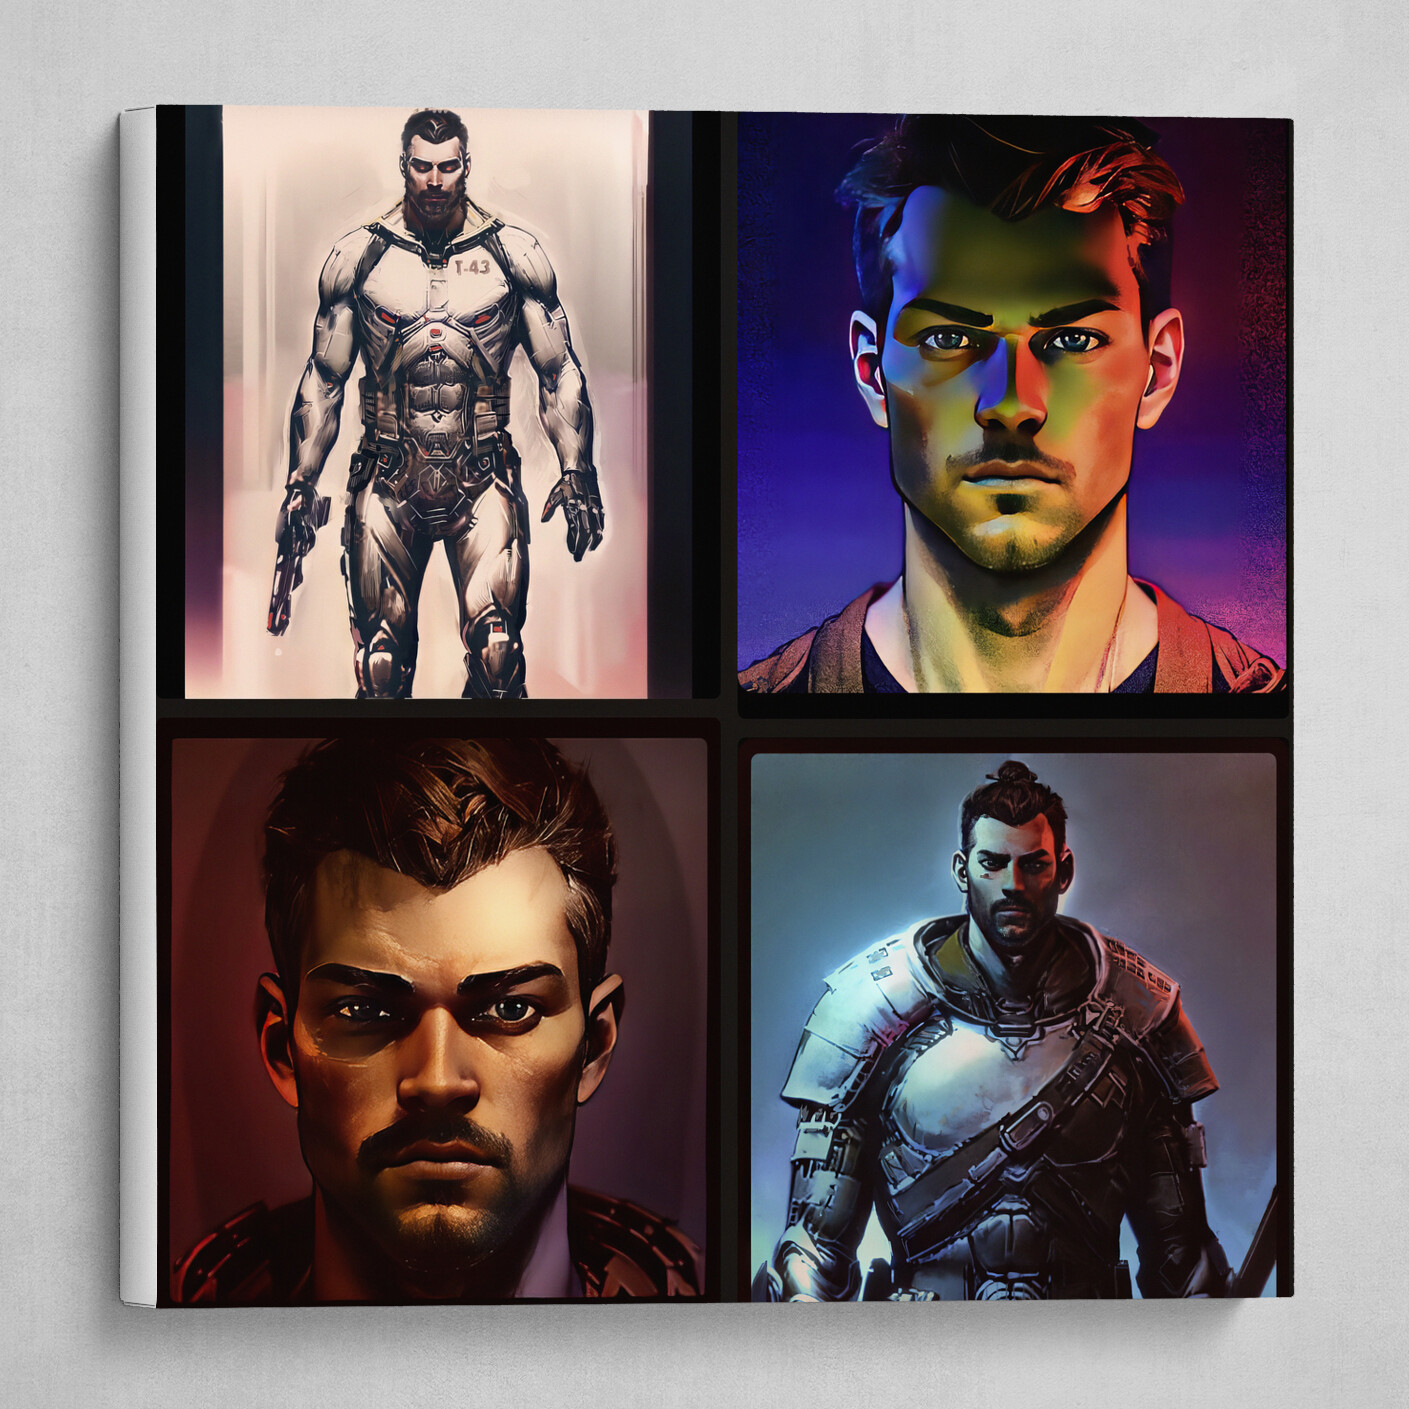 Murdock VII - Photo collage